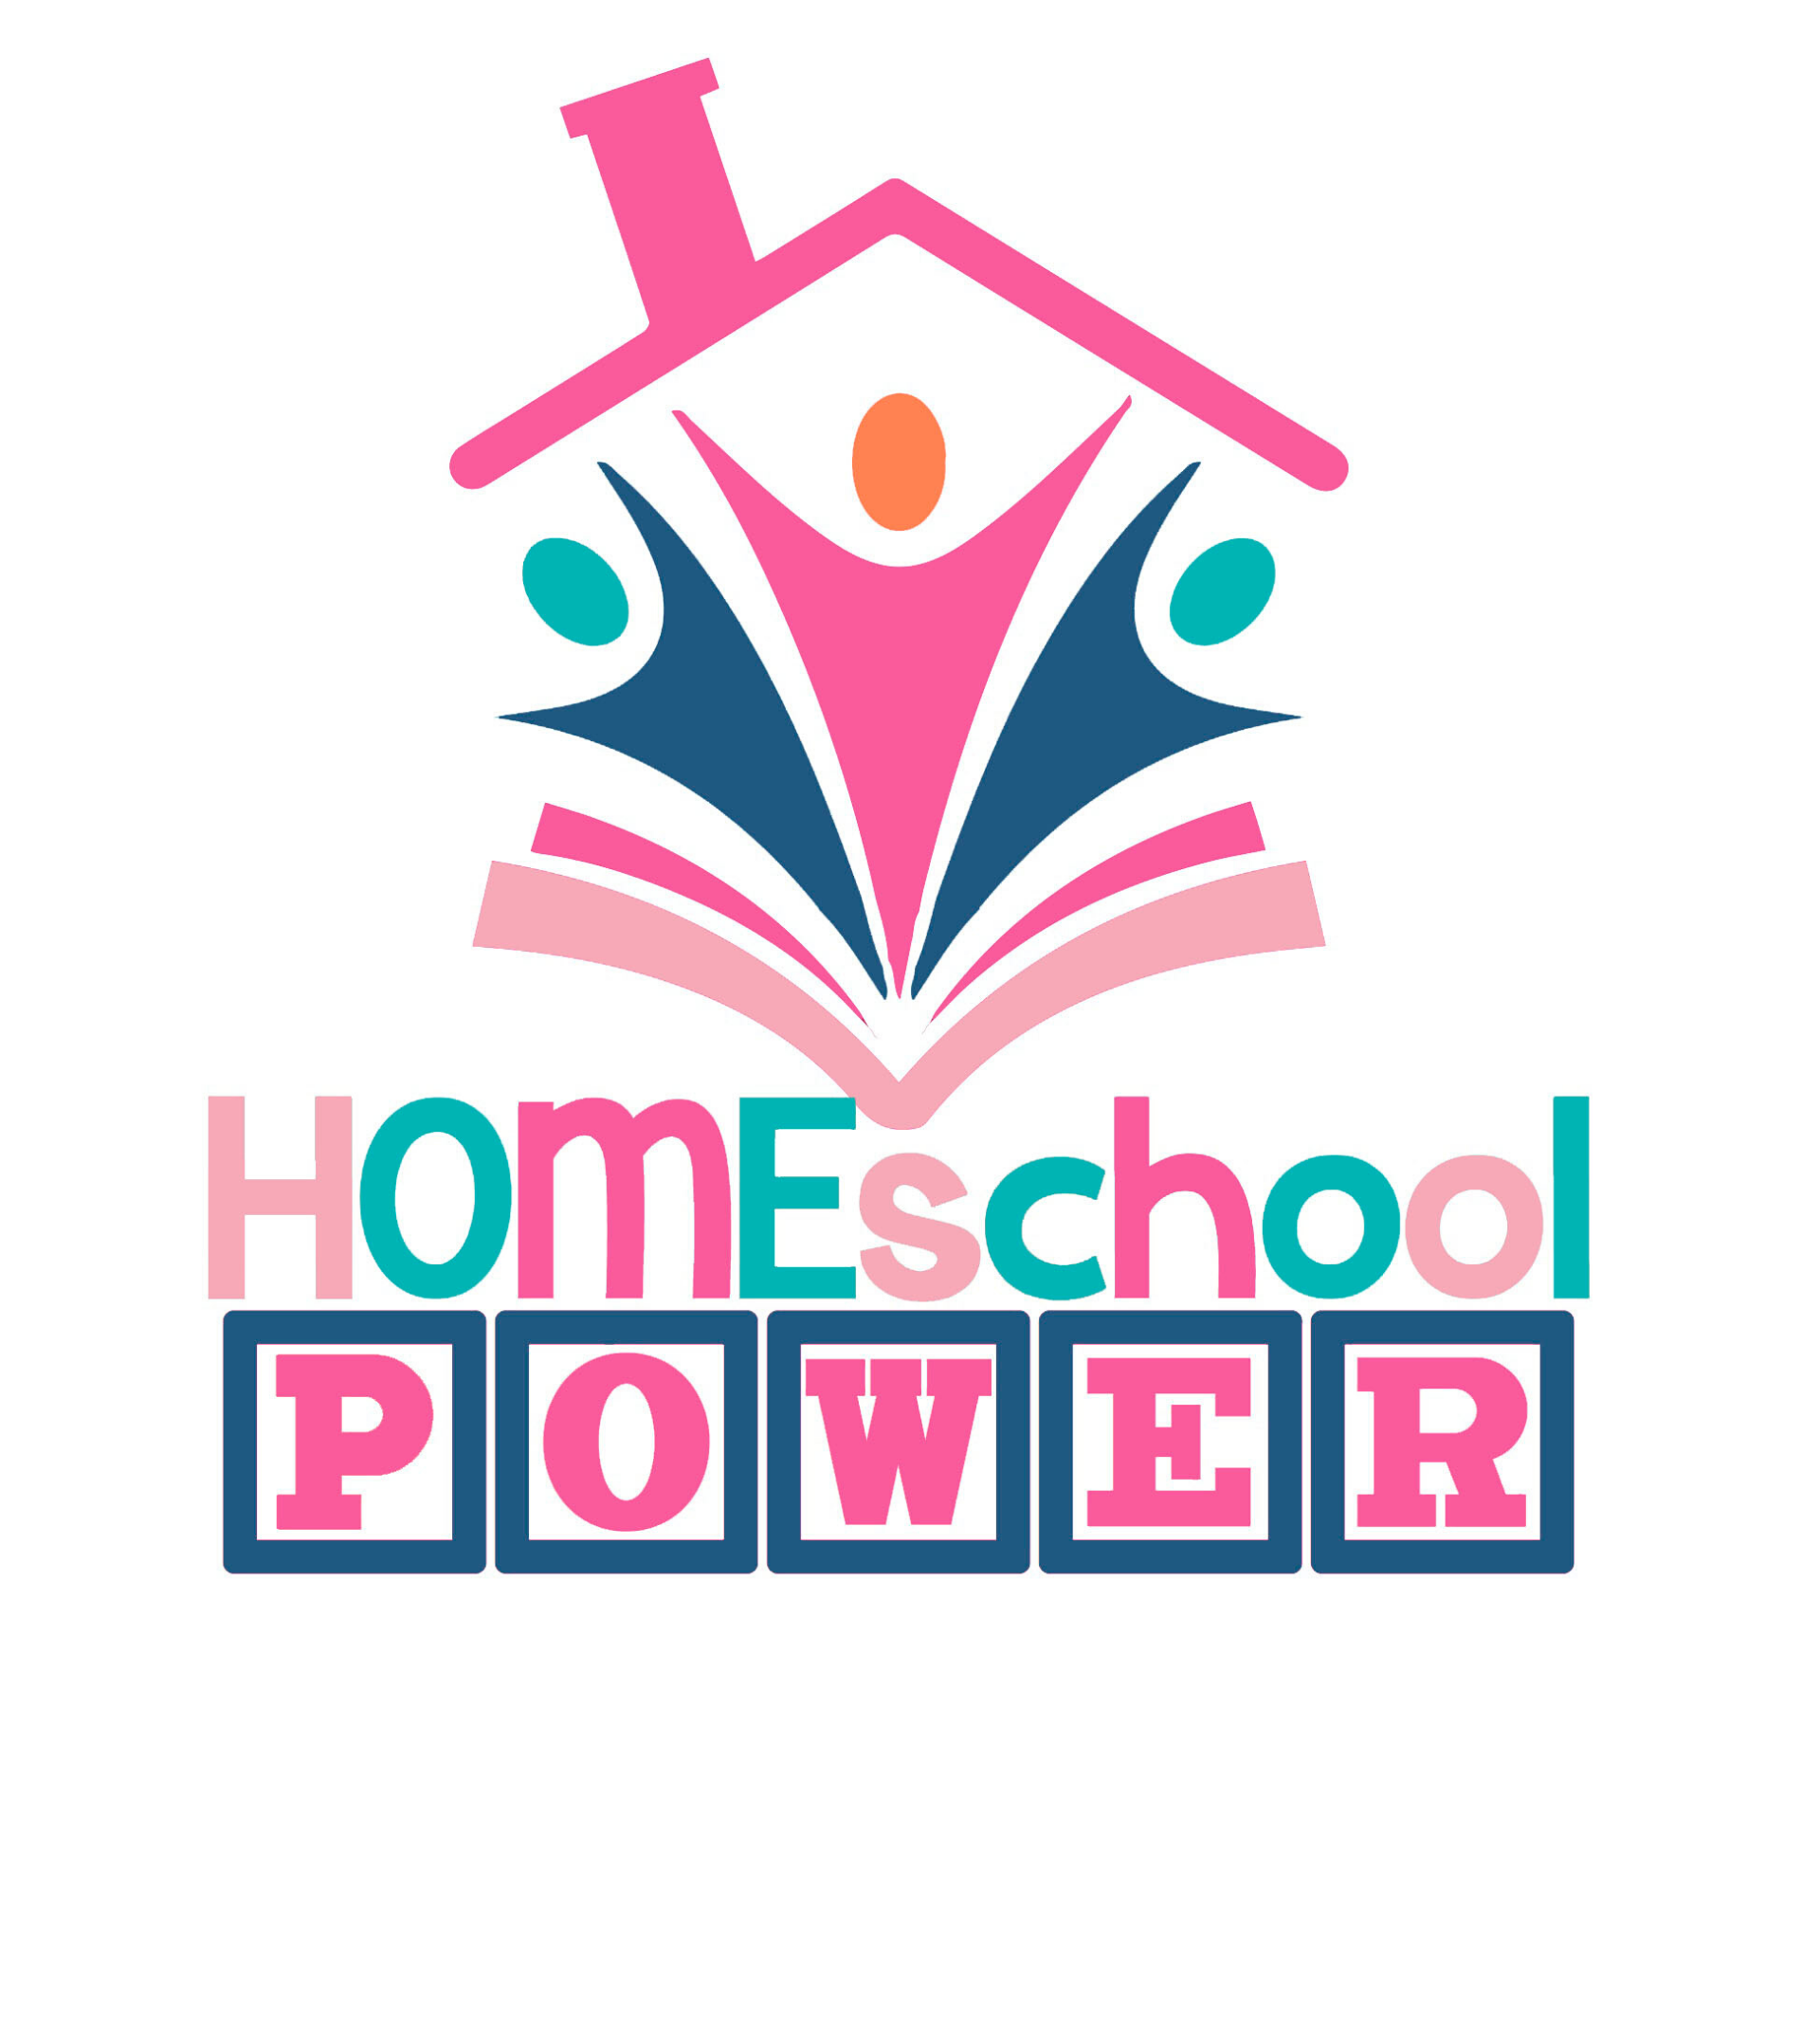 Homeschool Power